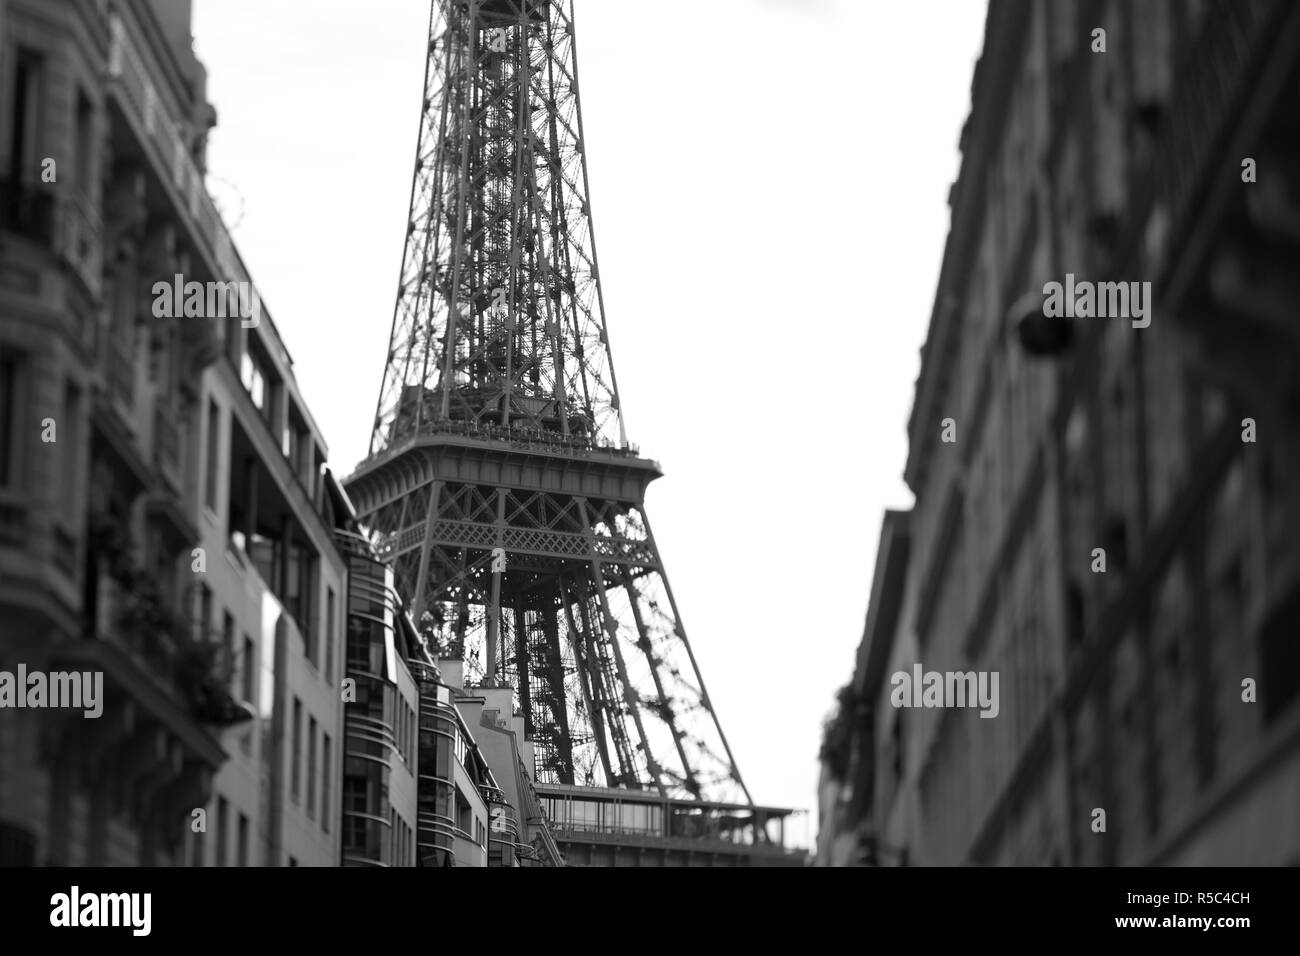 Eiffel Tower and River Seine, Paris, France Stock Photo